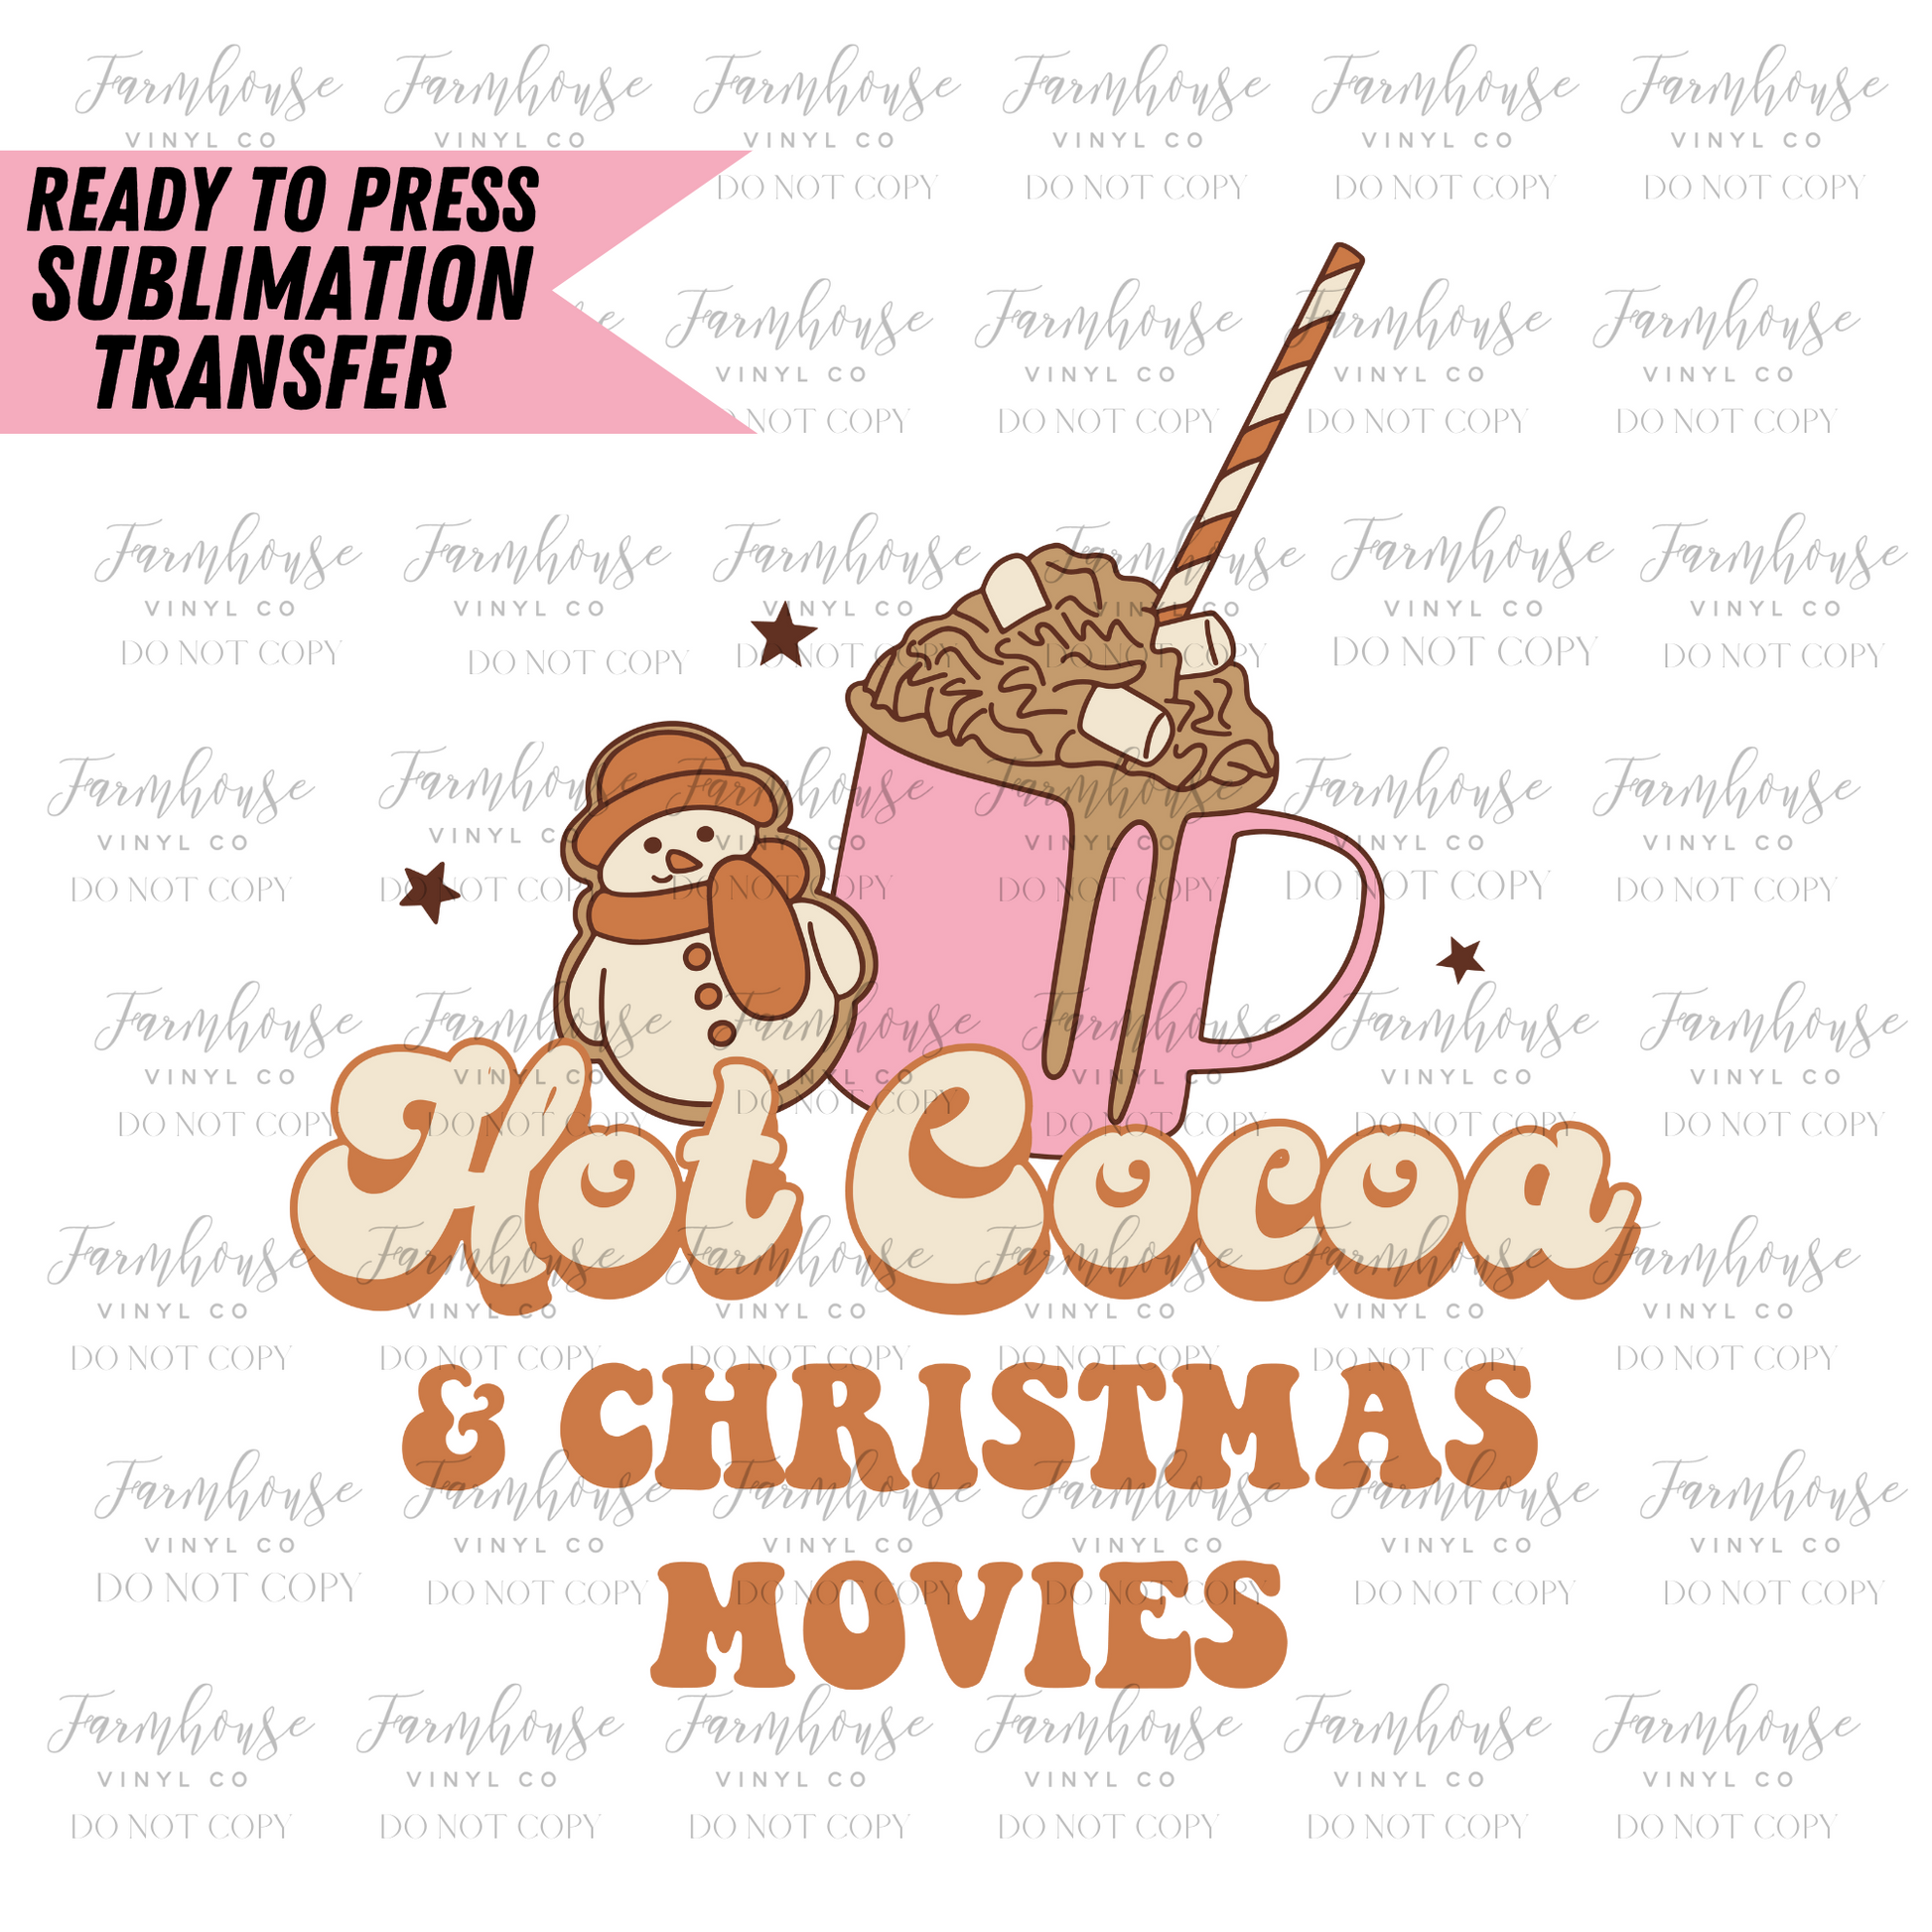 Hot Cocoa And Christmas Movies Ready To Press Sublimation Transfer - Farmhouse Vinyl Co